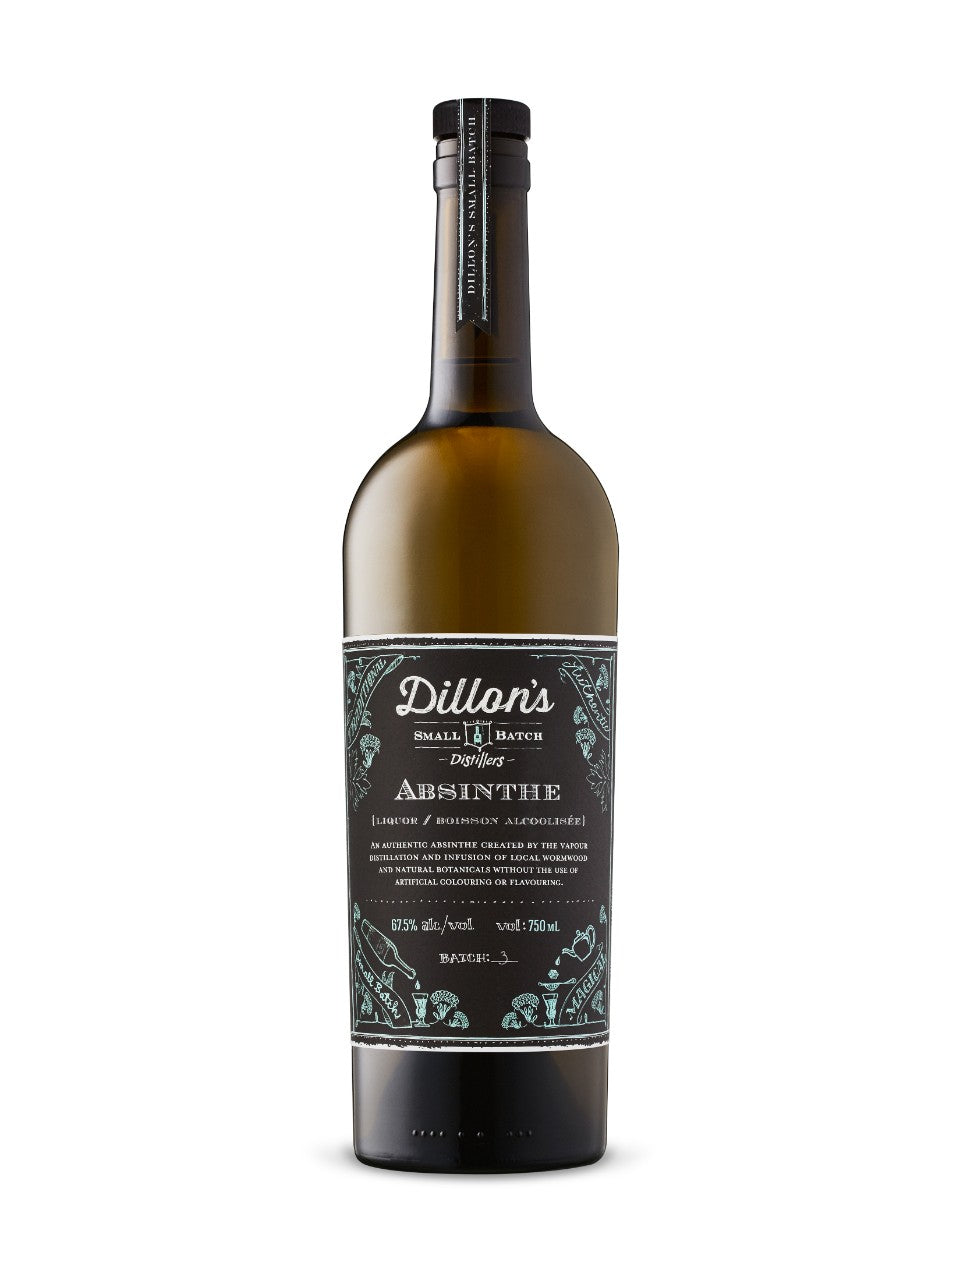 Dillon's Absinthe 750 mL bottle